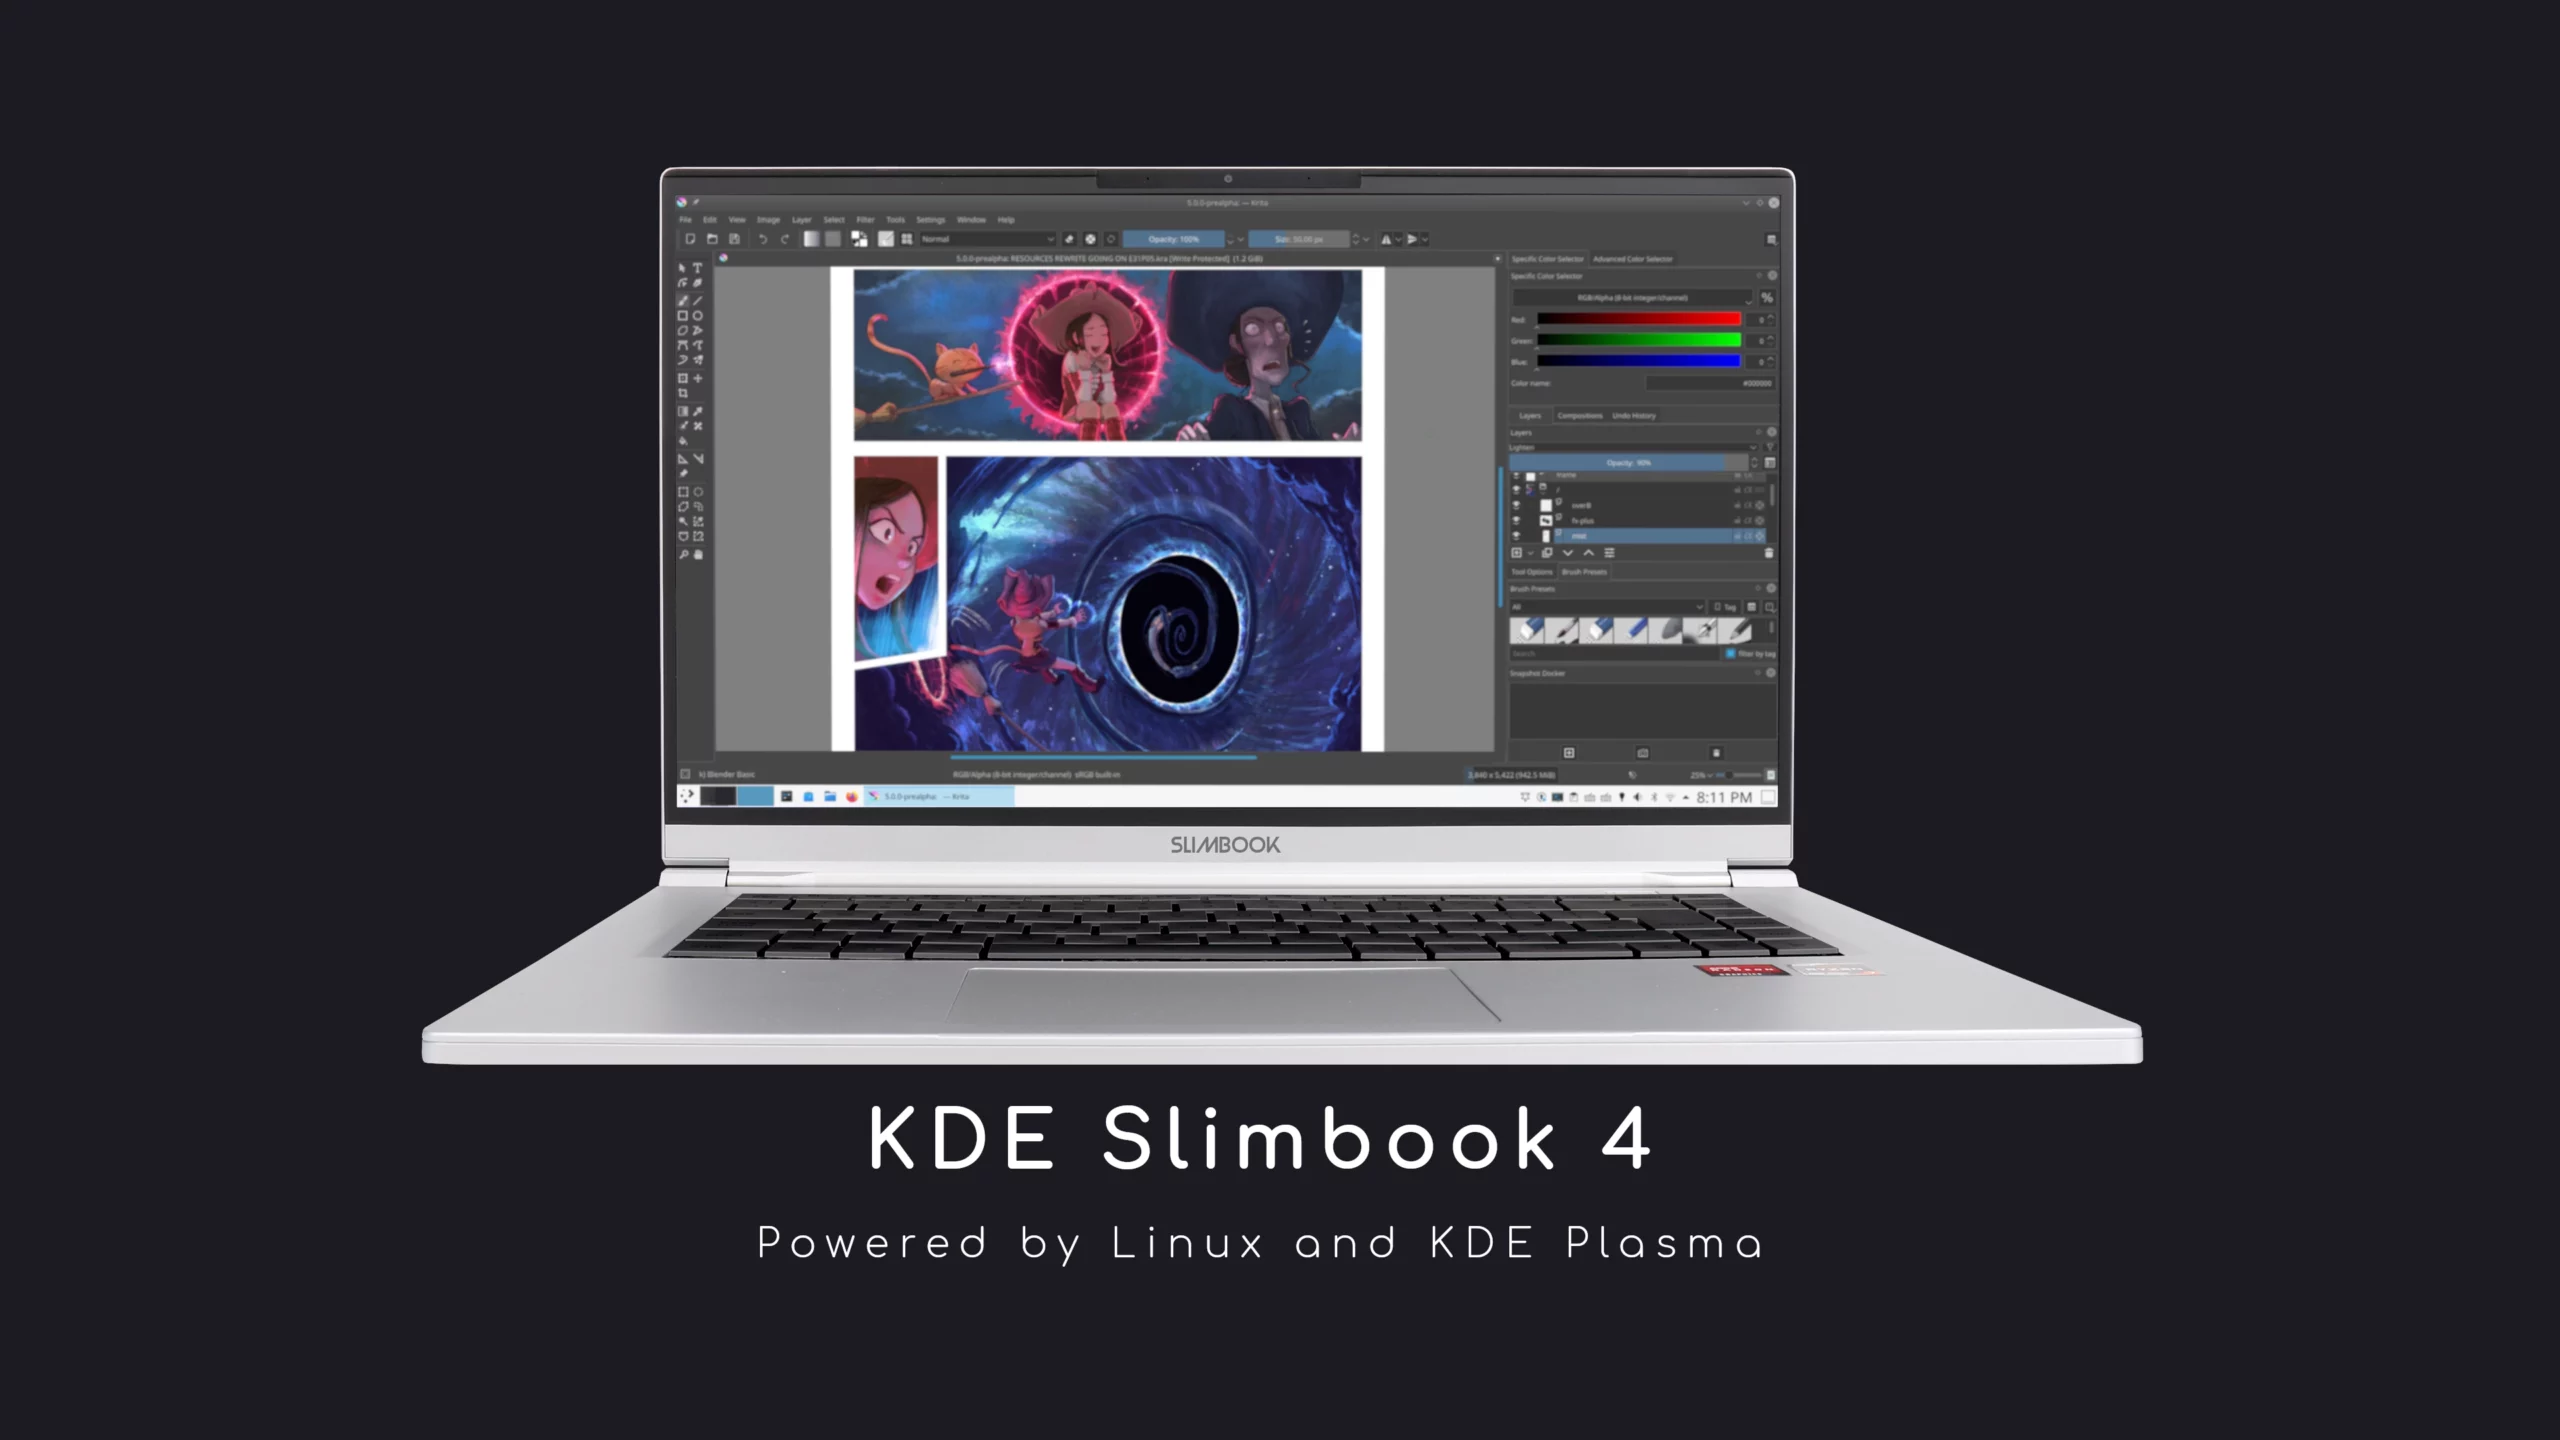 KDE Slimbook Gen4 Linux Laptop Is Available Now with an AMD Ryzen 7 5700U CPU